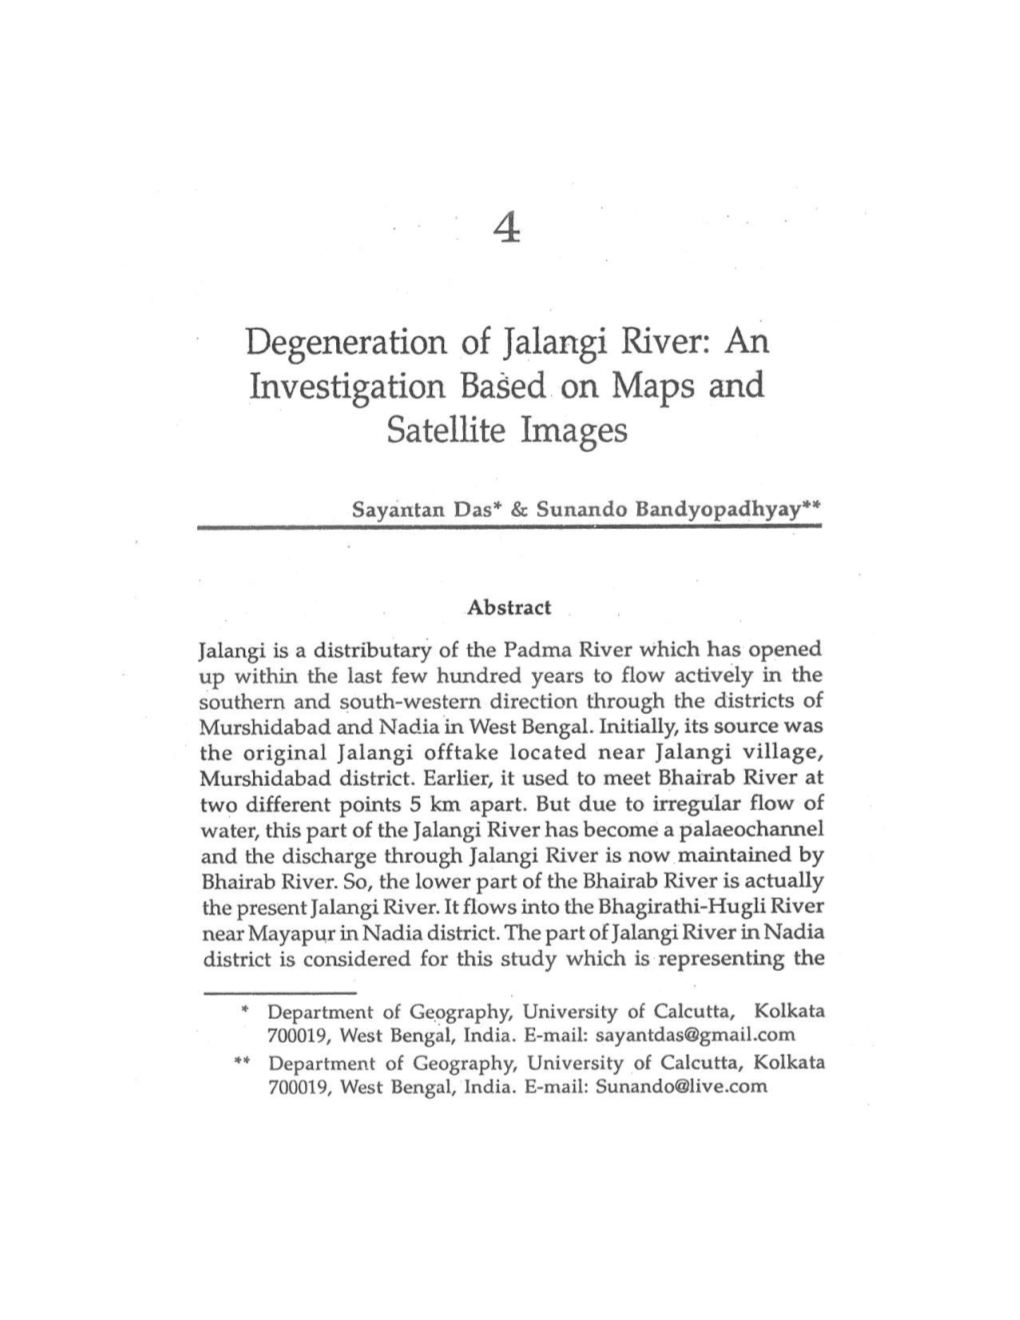 Degeneration of Jalangi River: an Maps